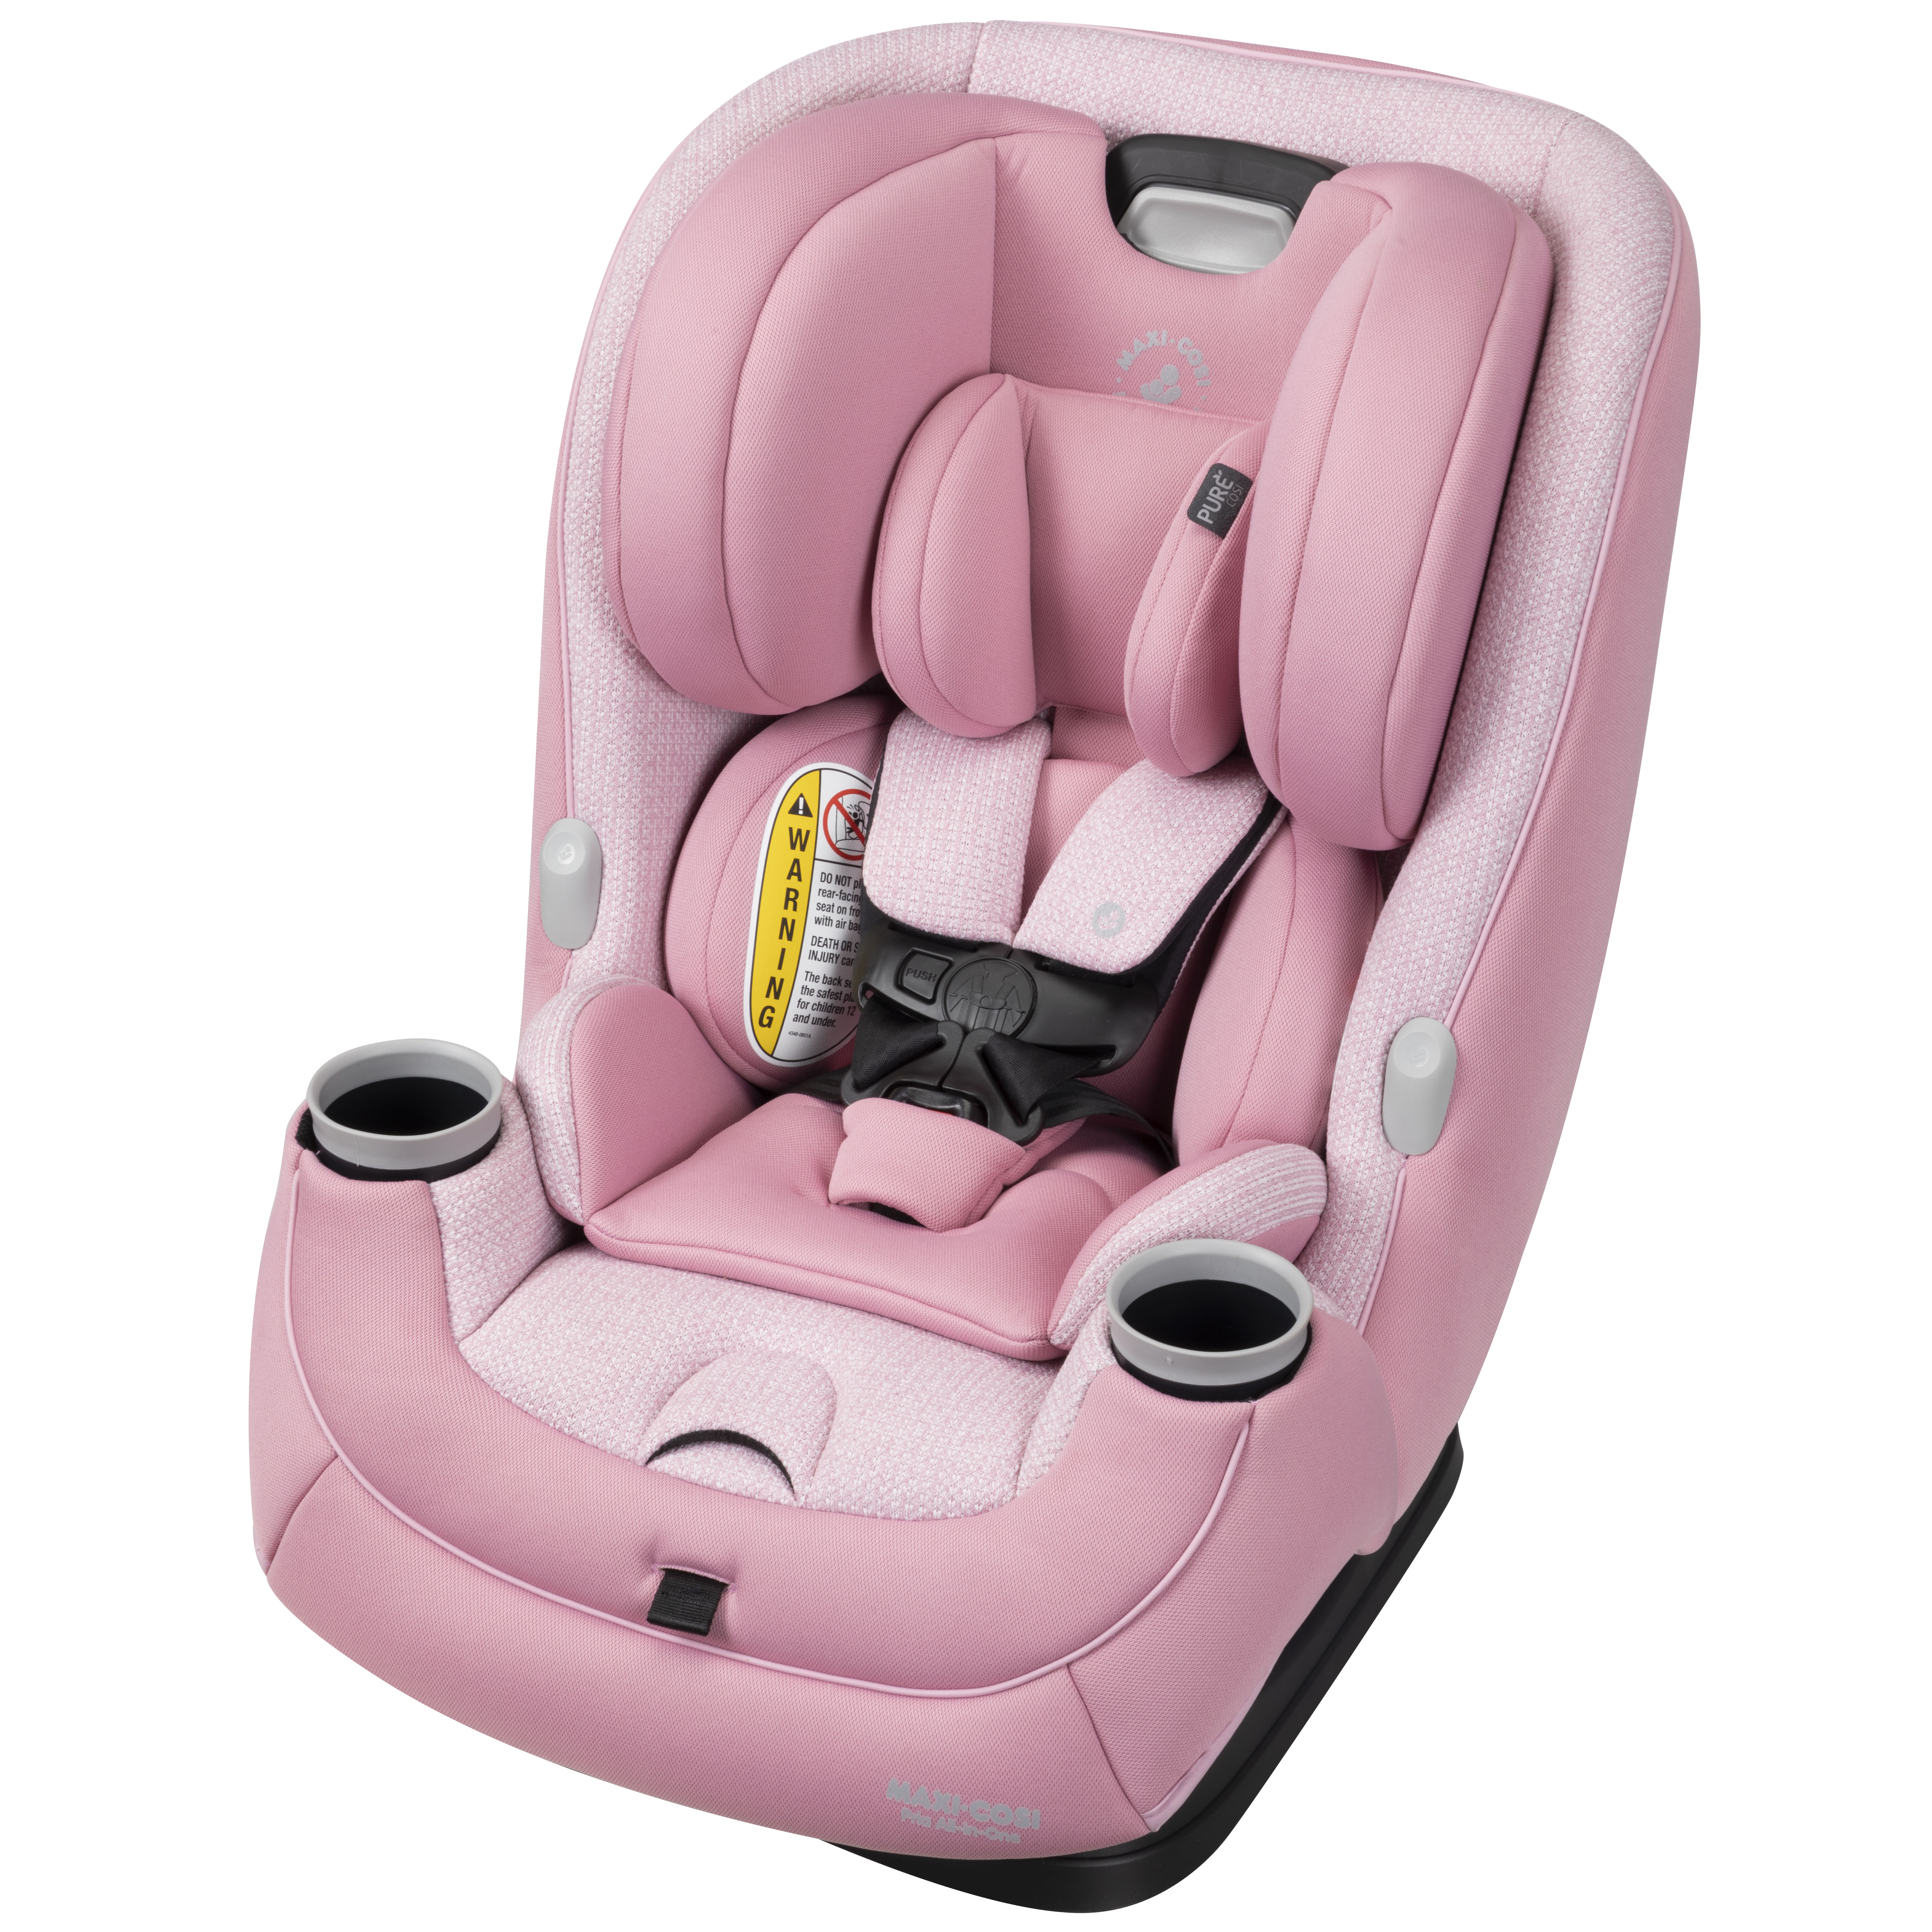 Maxi-Cosi Pria All-in-One Convertible Car Seat, Rose Pink Sweater – PureCosi, - image 1 of 6